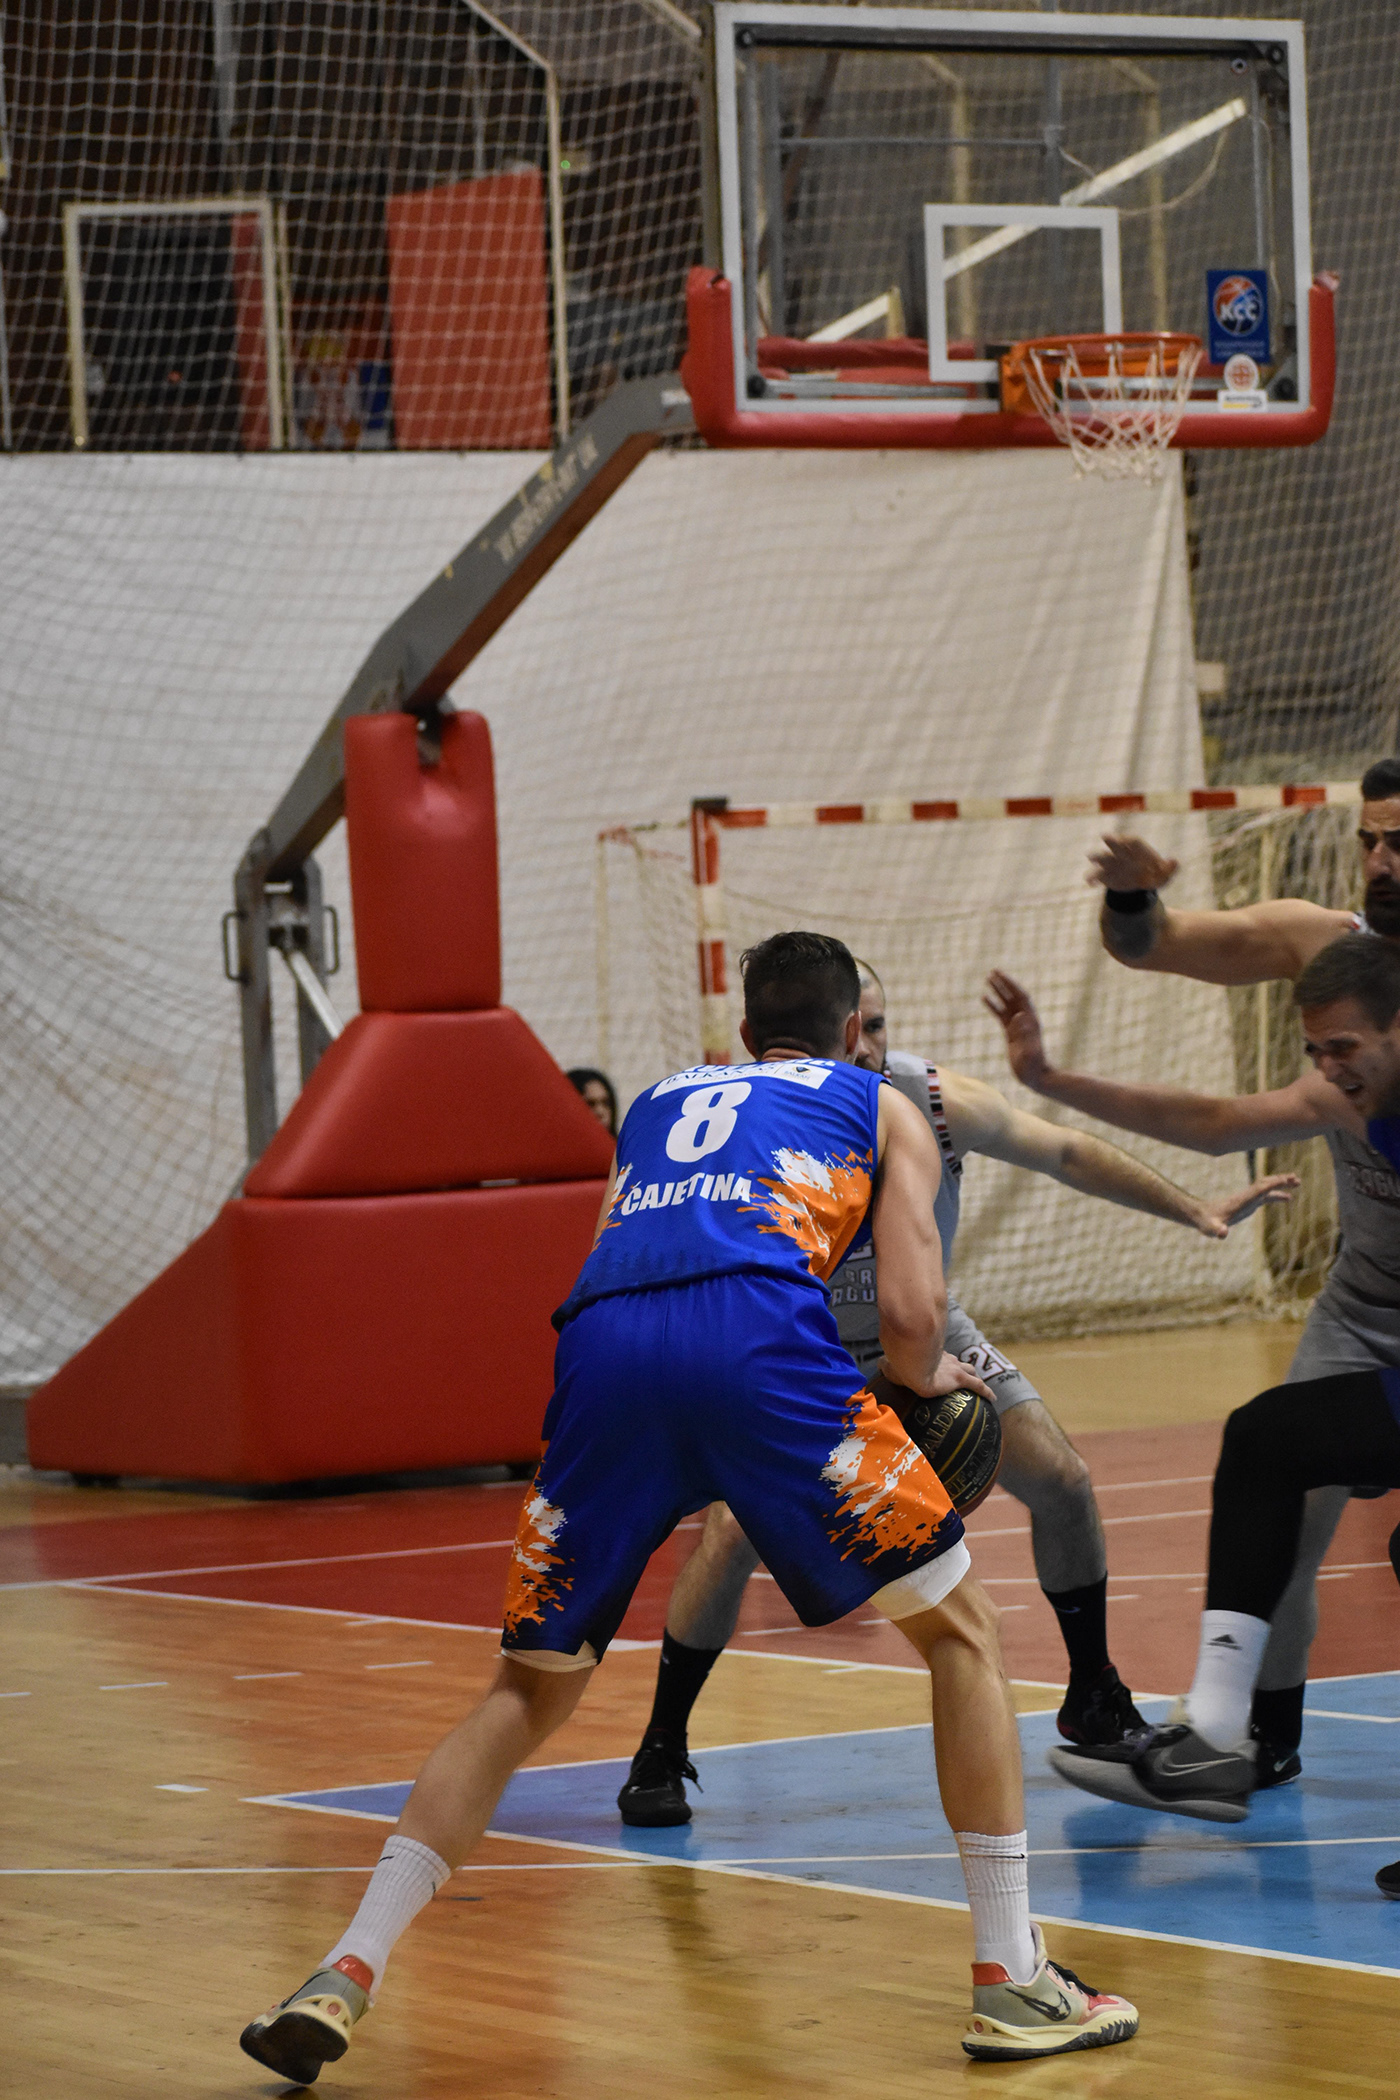 basketball kls Košarkaška liga Srbije Kragujevac Nikon D3500 radnicki kragujevac sports zlatibor